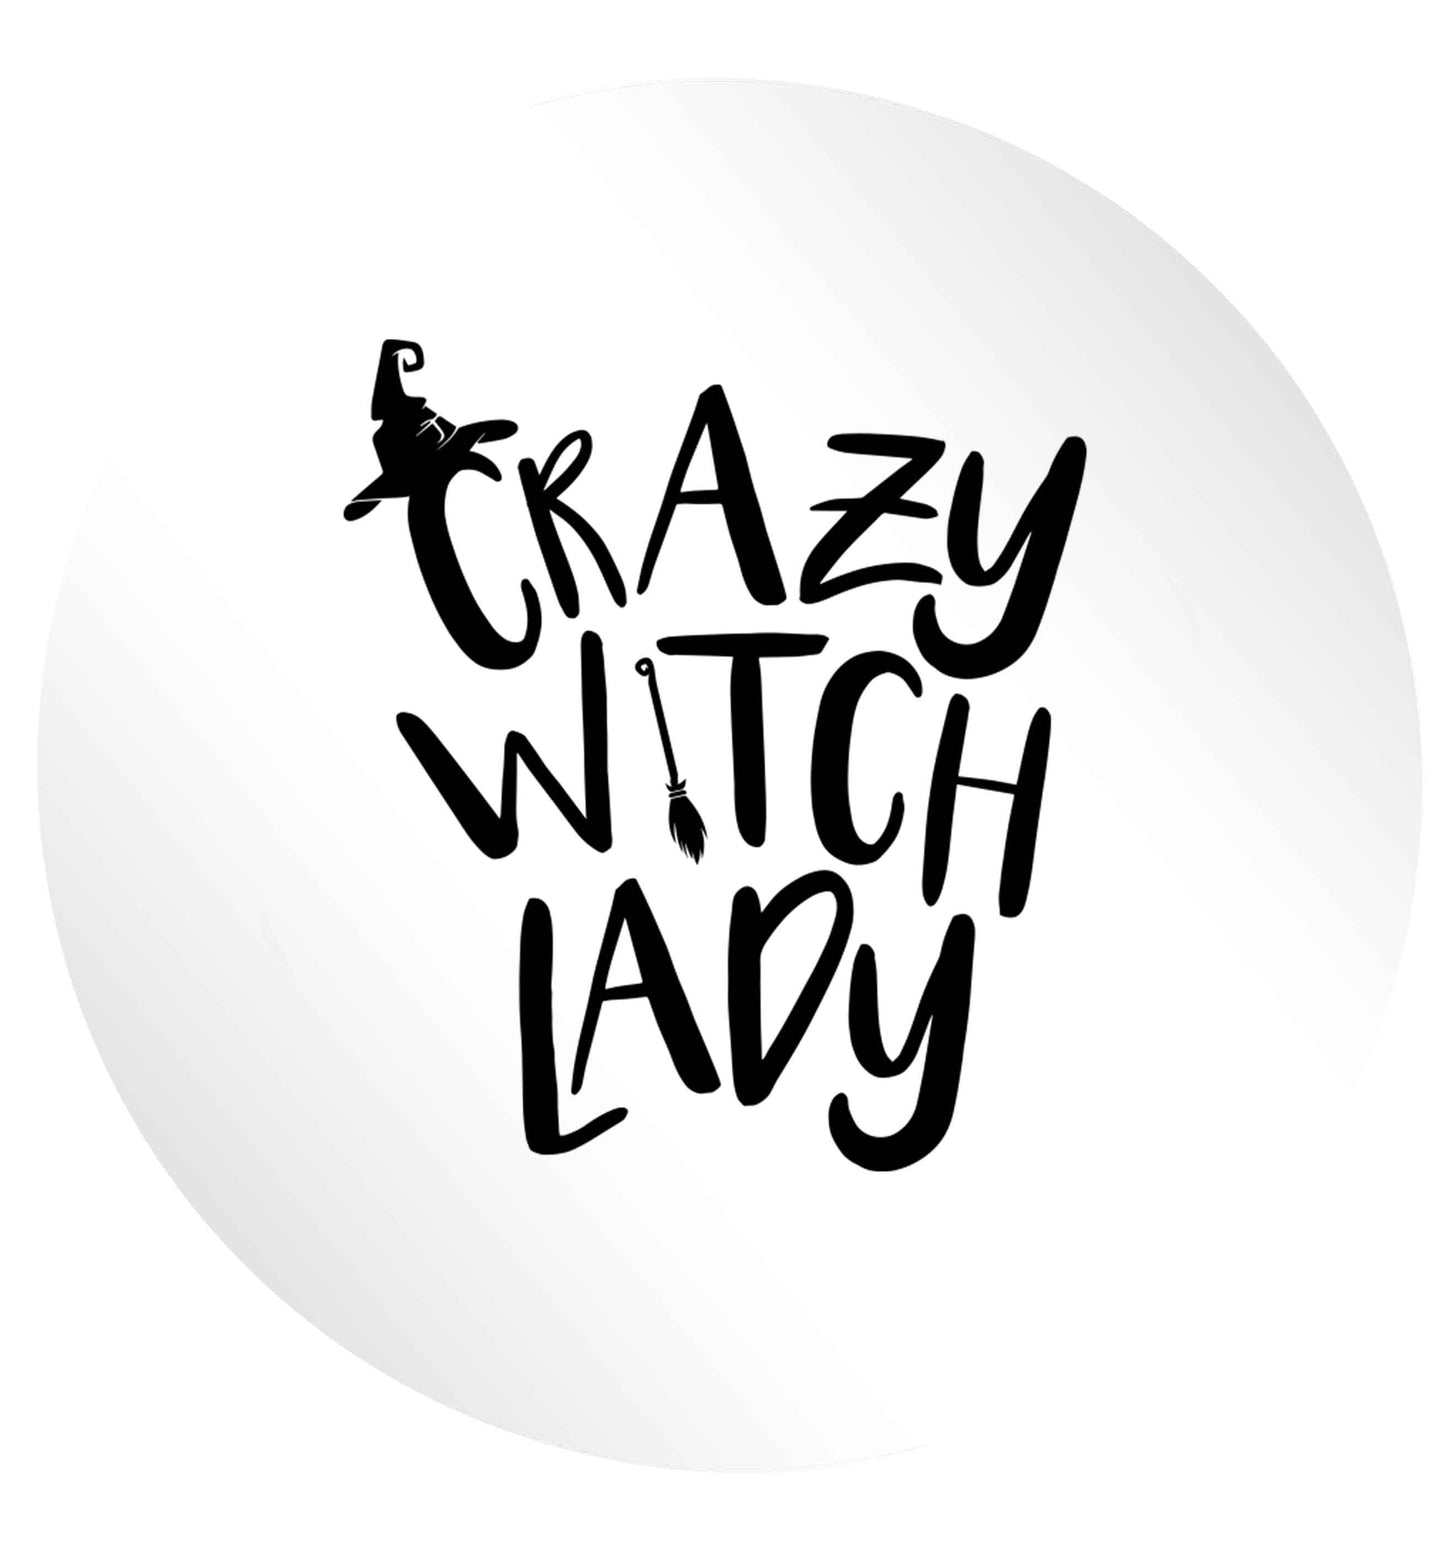 Crazy witch lady 24 @ 45mm matt circle stickers